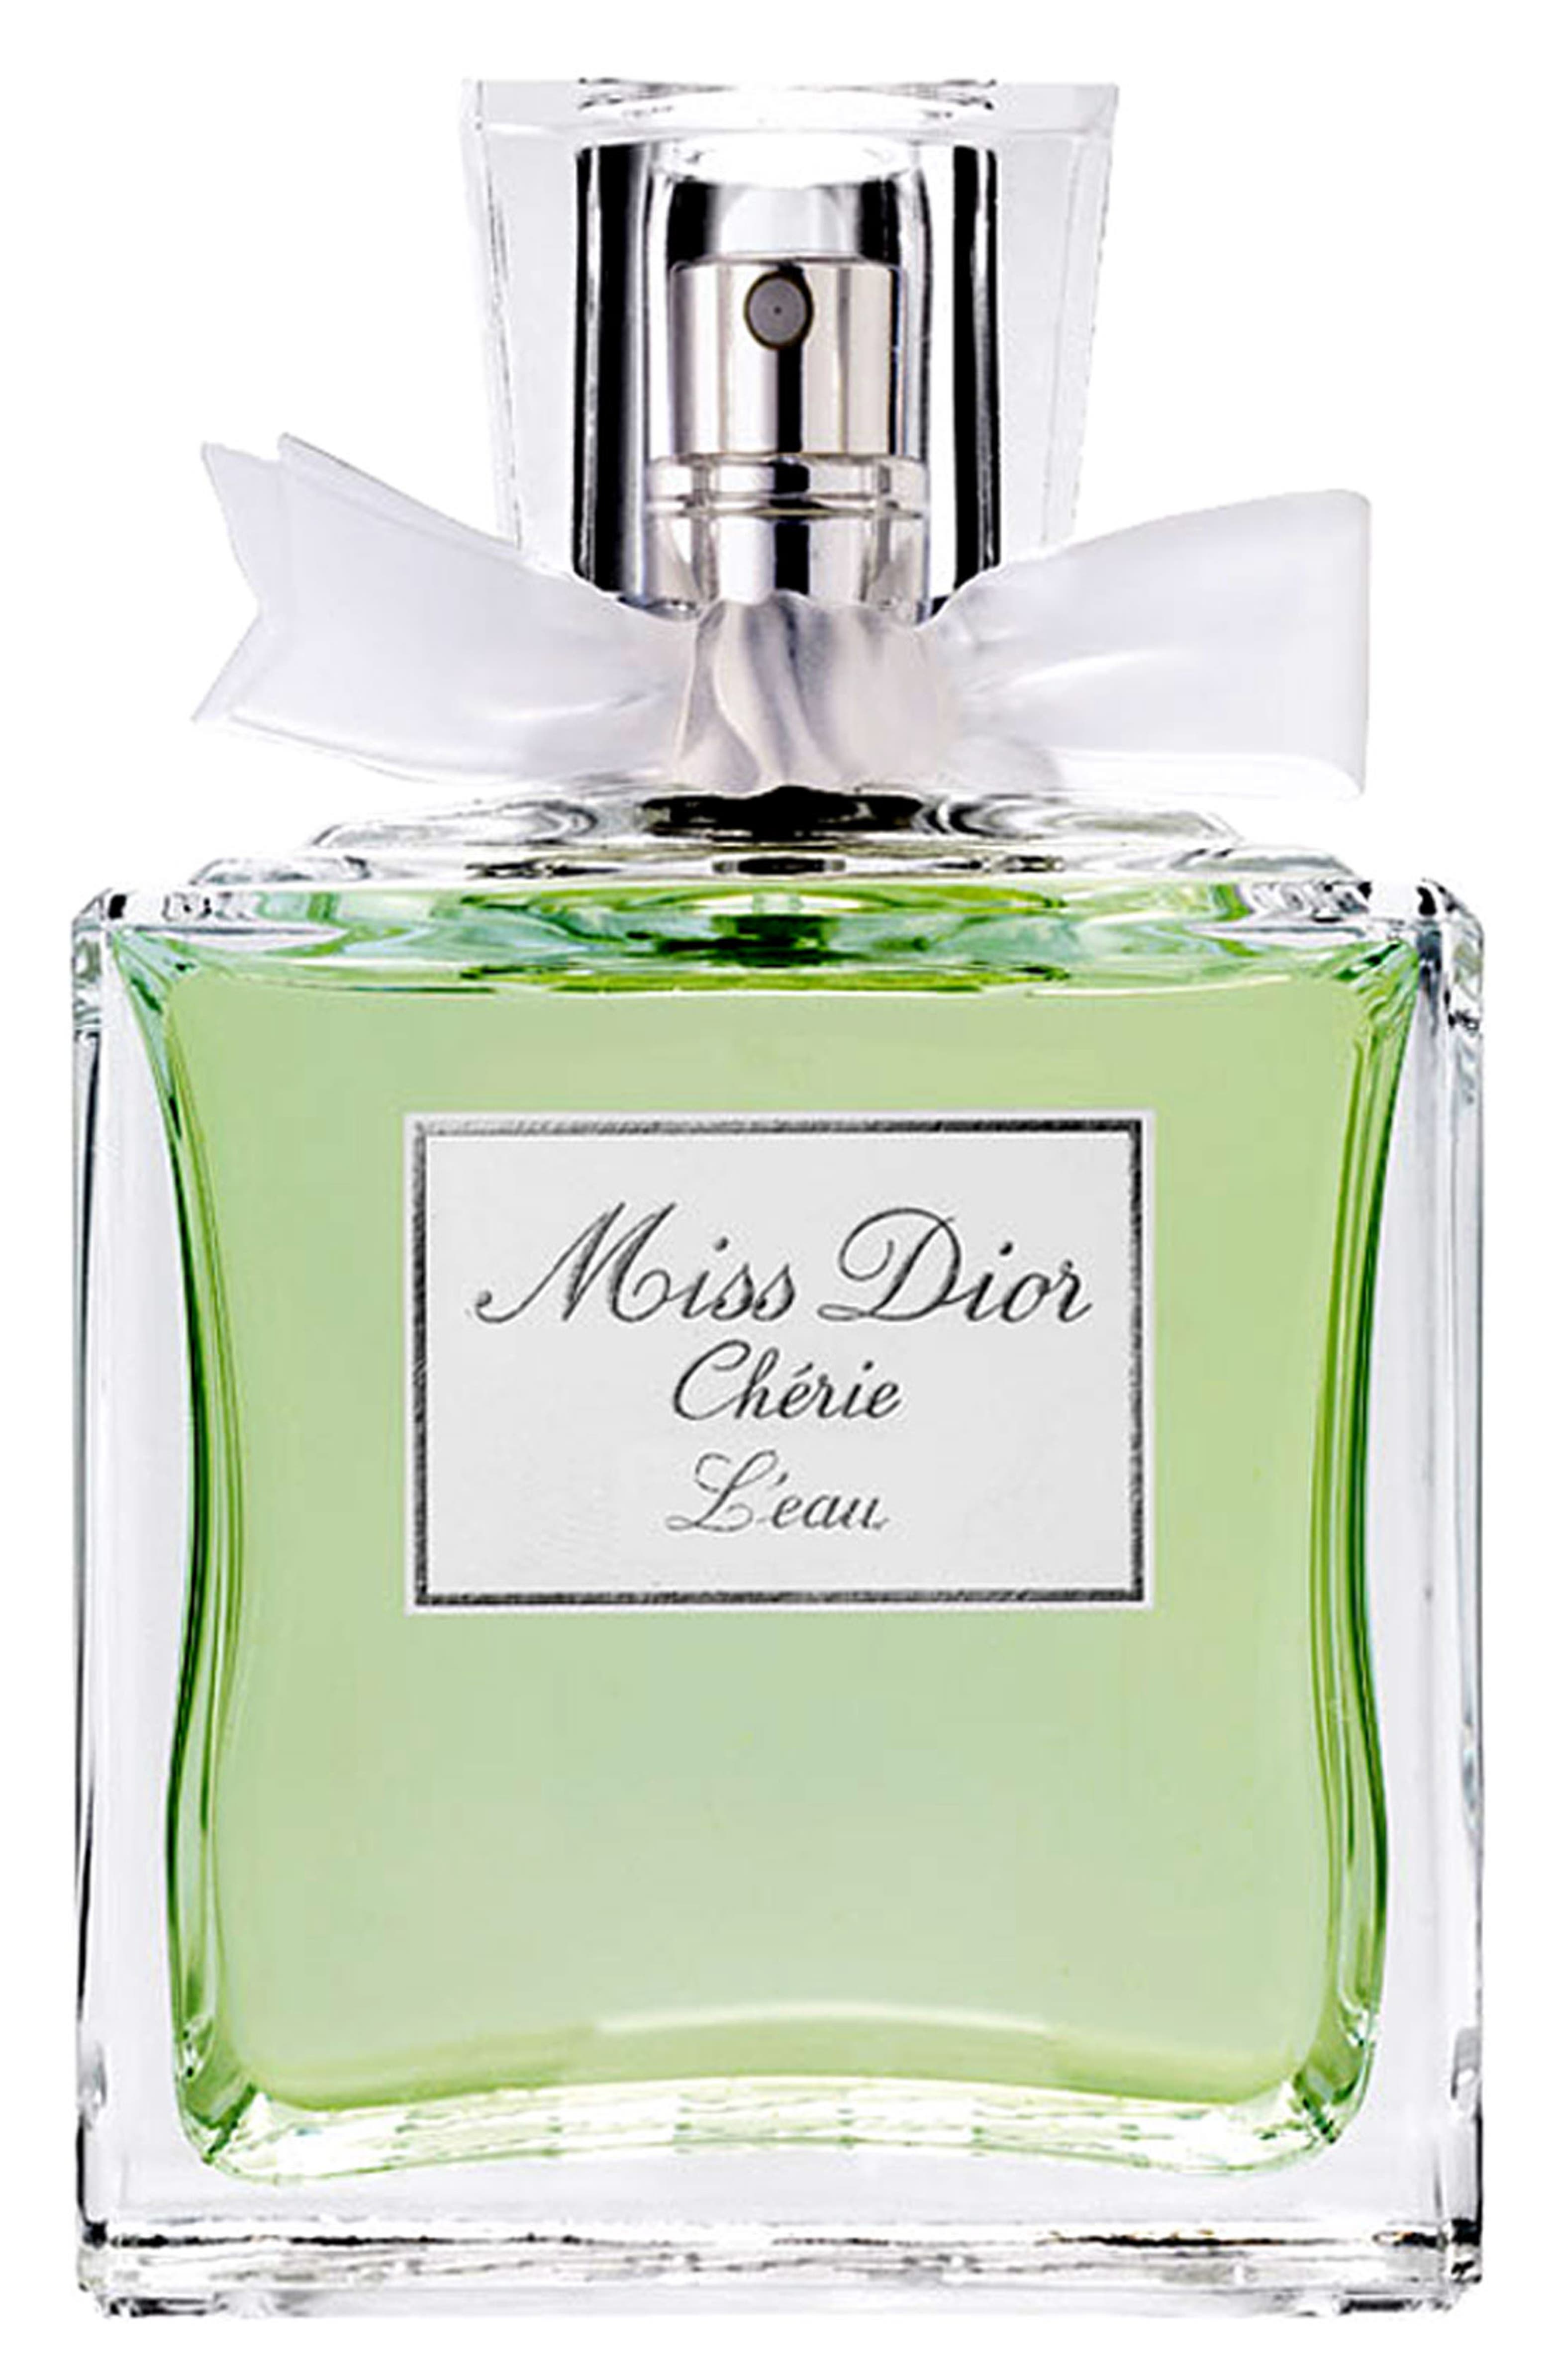 Dior Dior 'Miss Dior Cherie' L'Eau Eau de Toilette Spray | Nordstrom